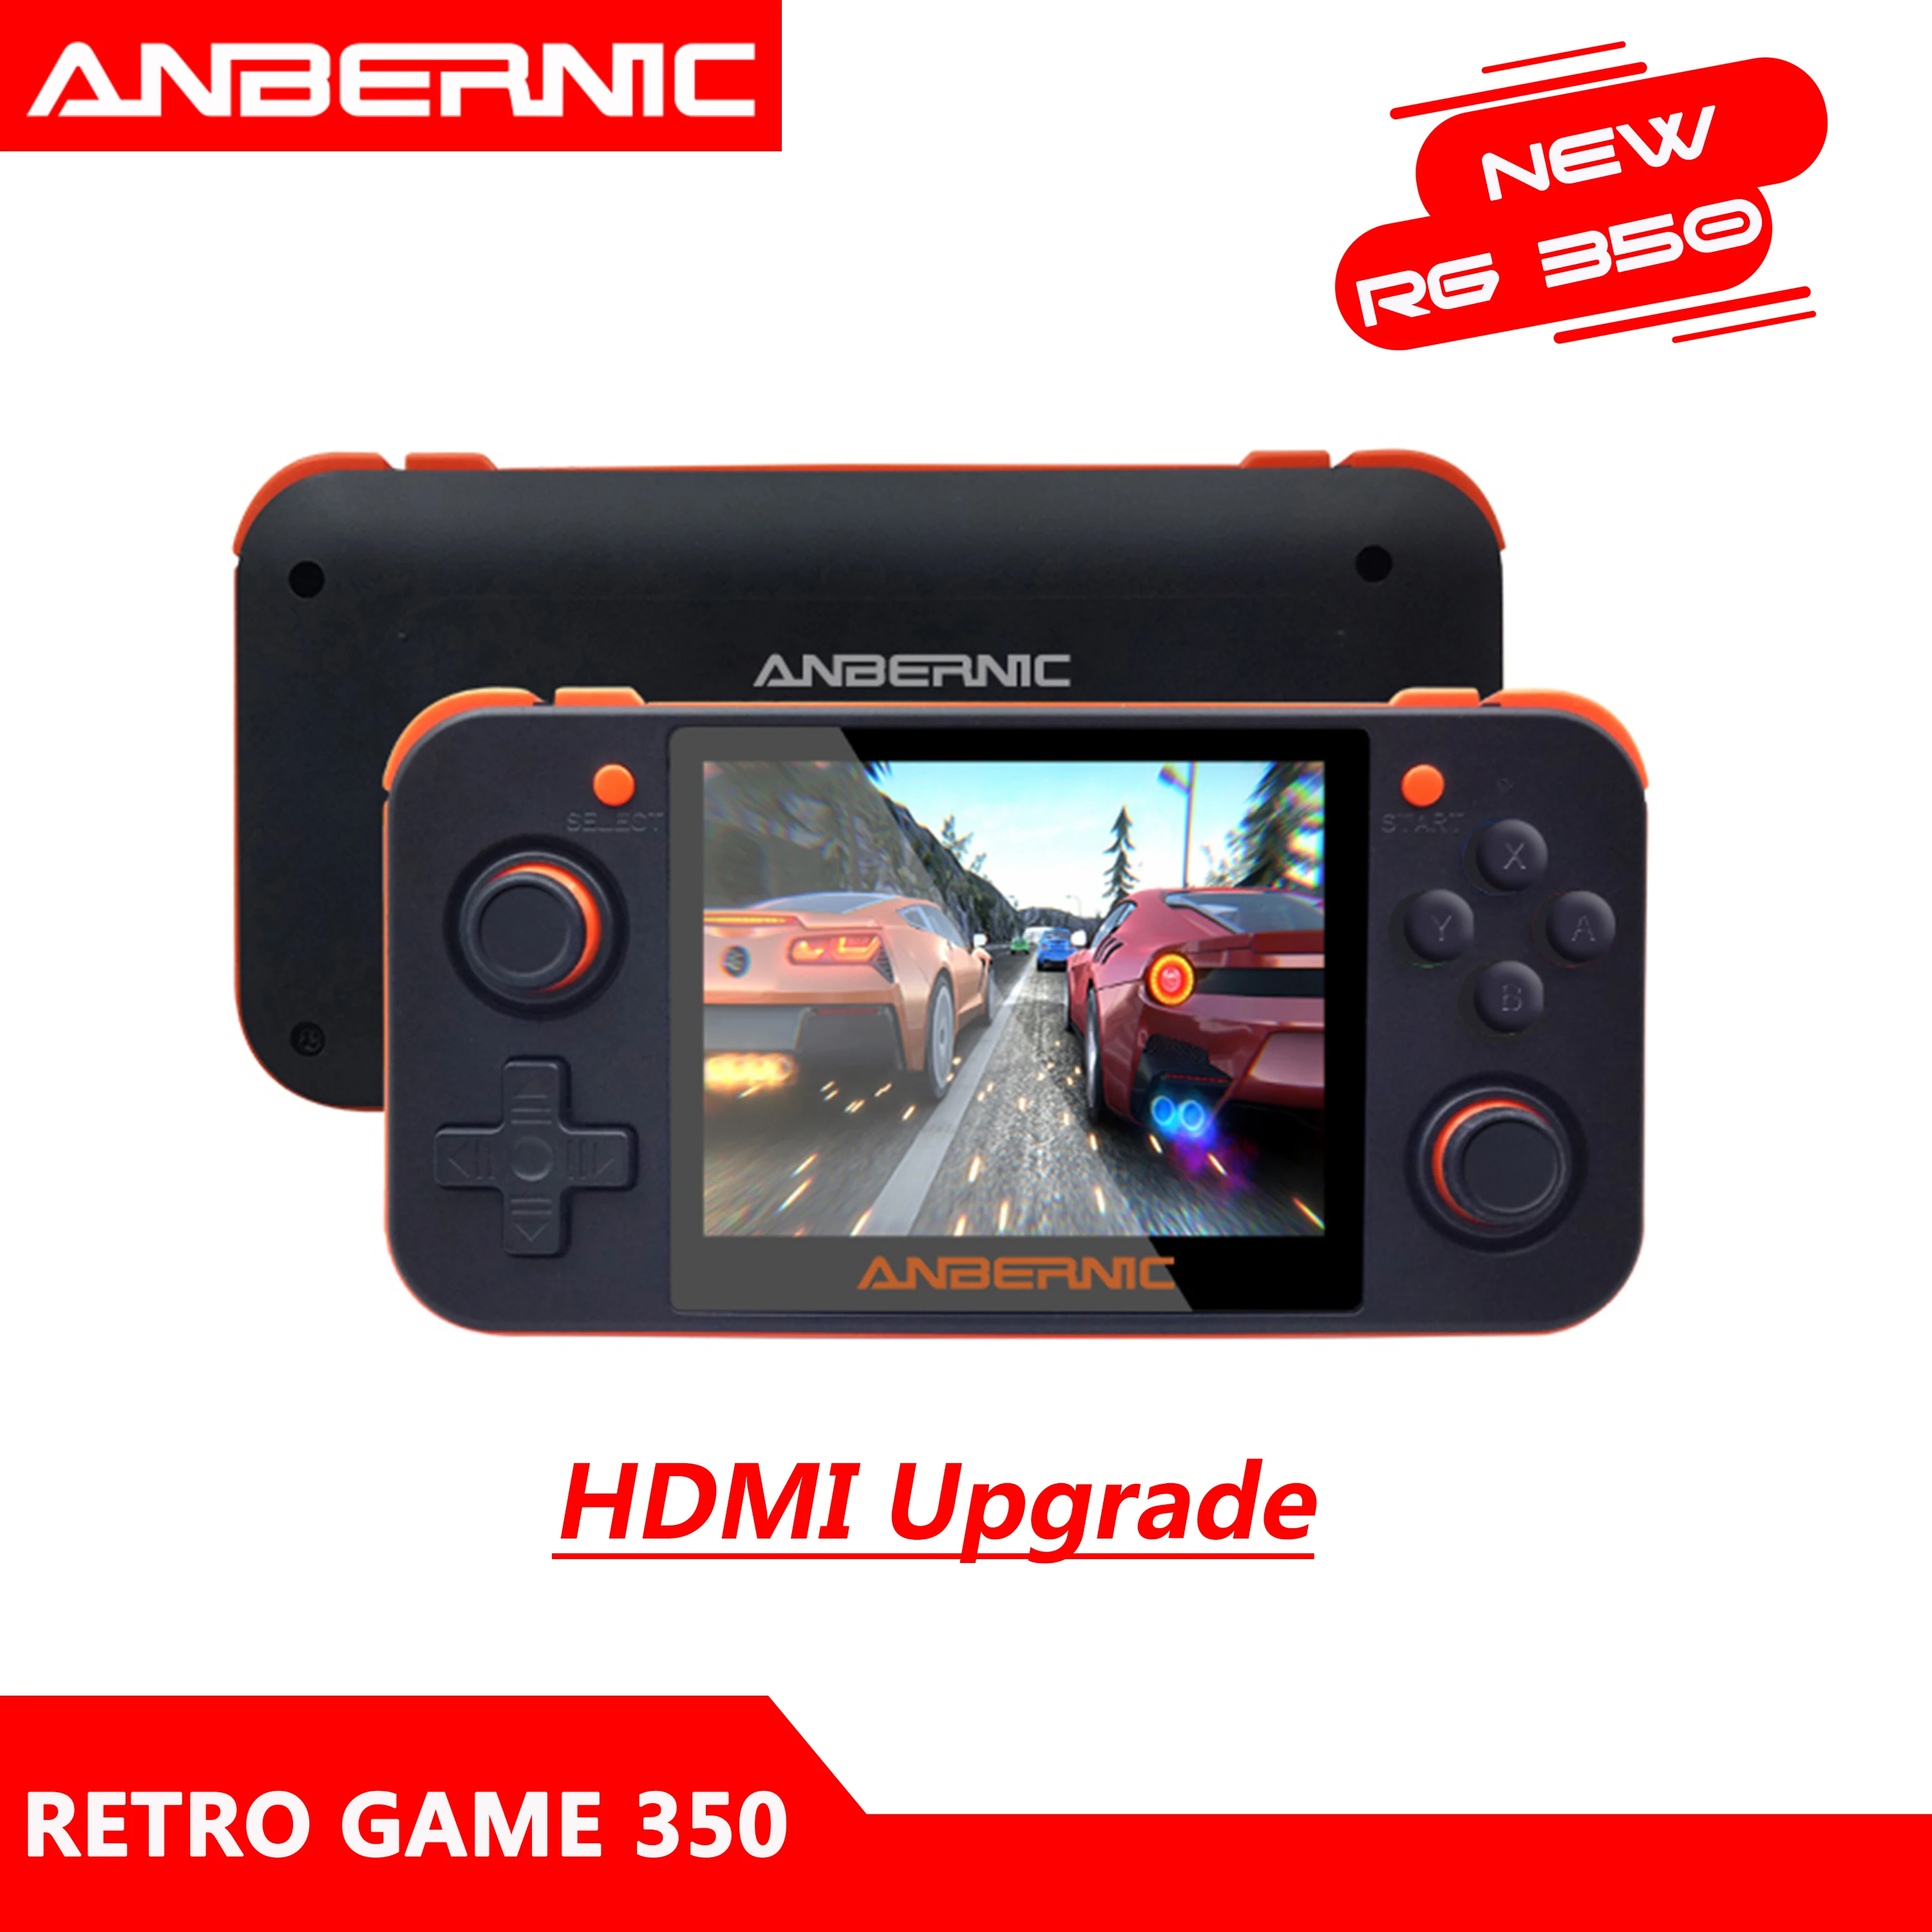 

ANBERNIC RG350 IPS Retro Games 350 Video games Upgrade game console 64bit opendingux HDMI TV 2500+ games RG350 PS1 Emulators 16G